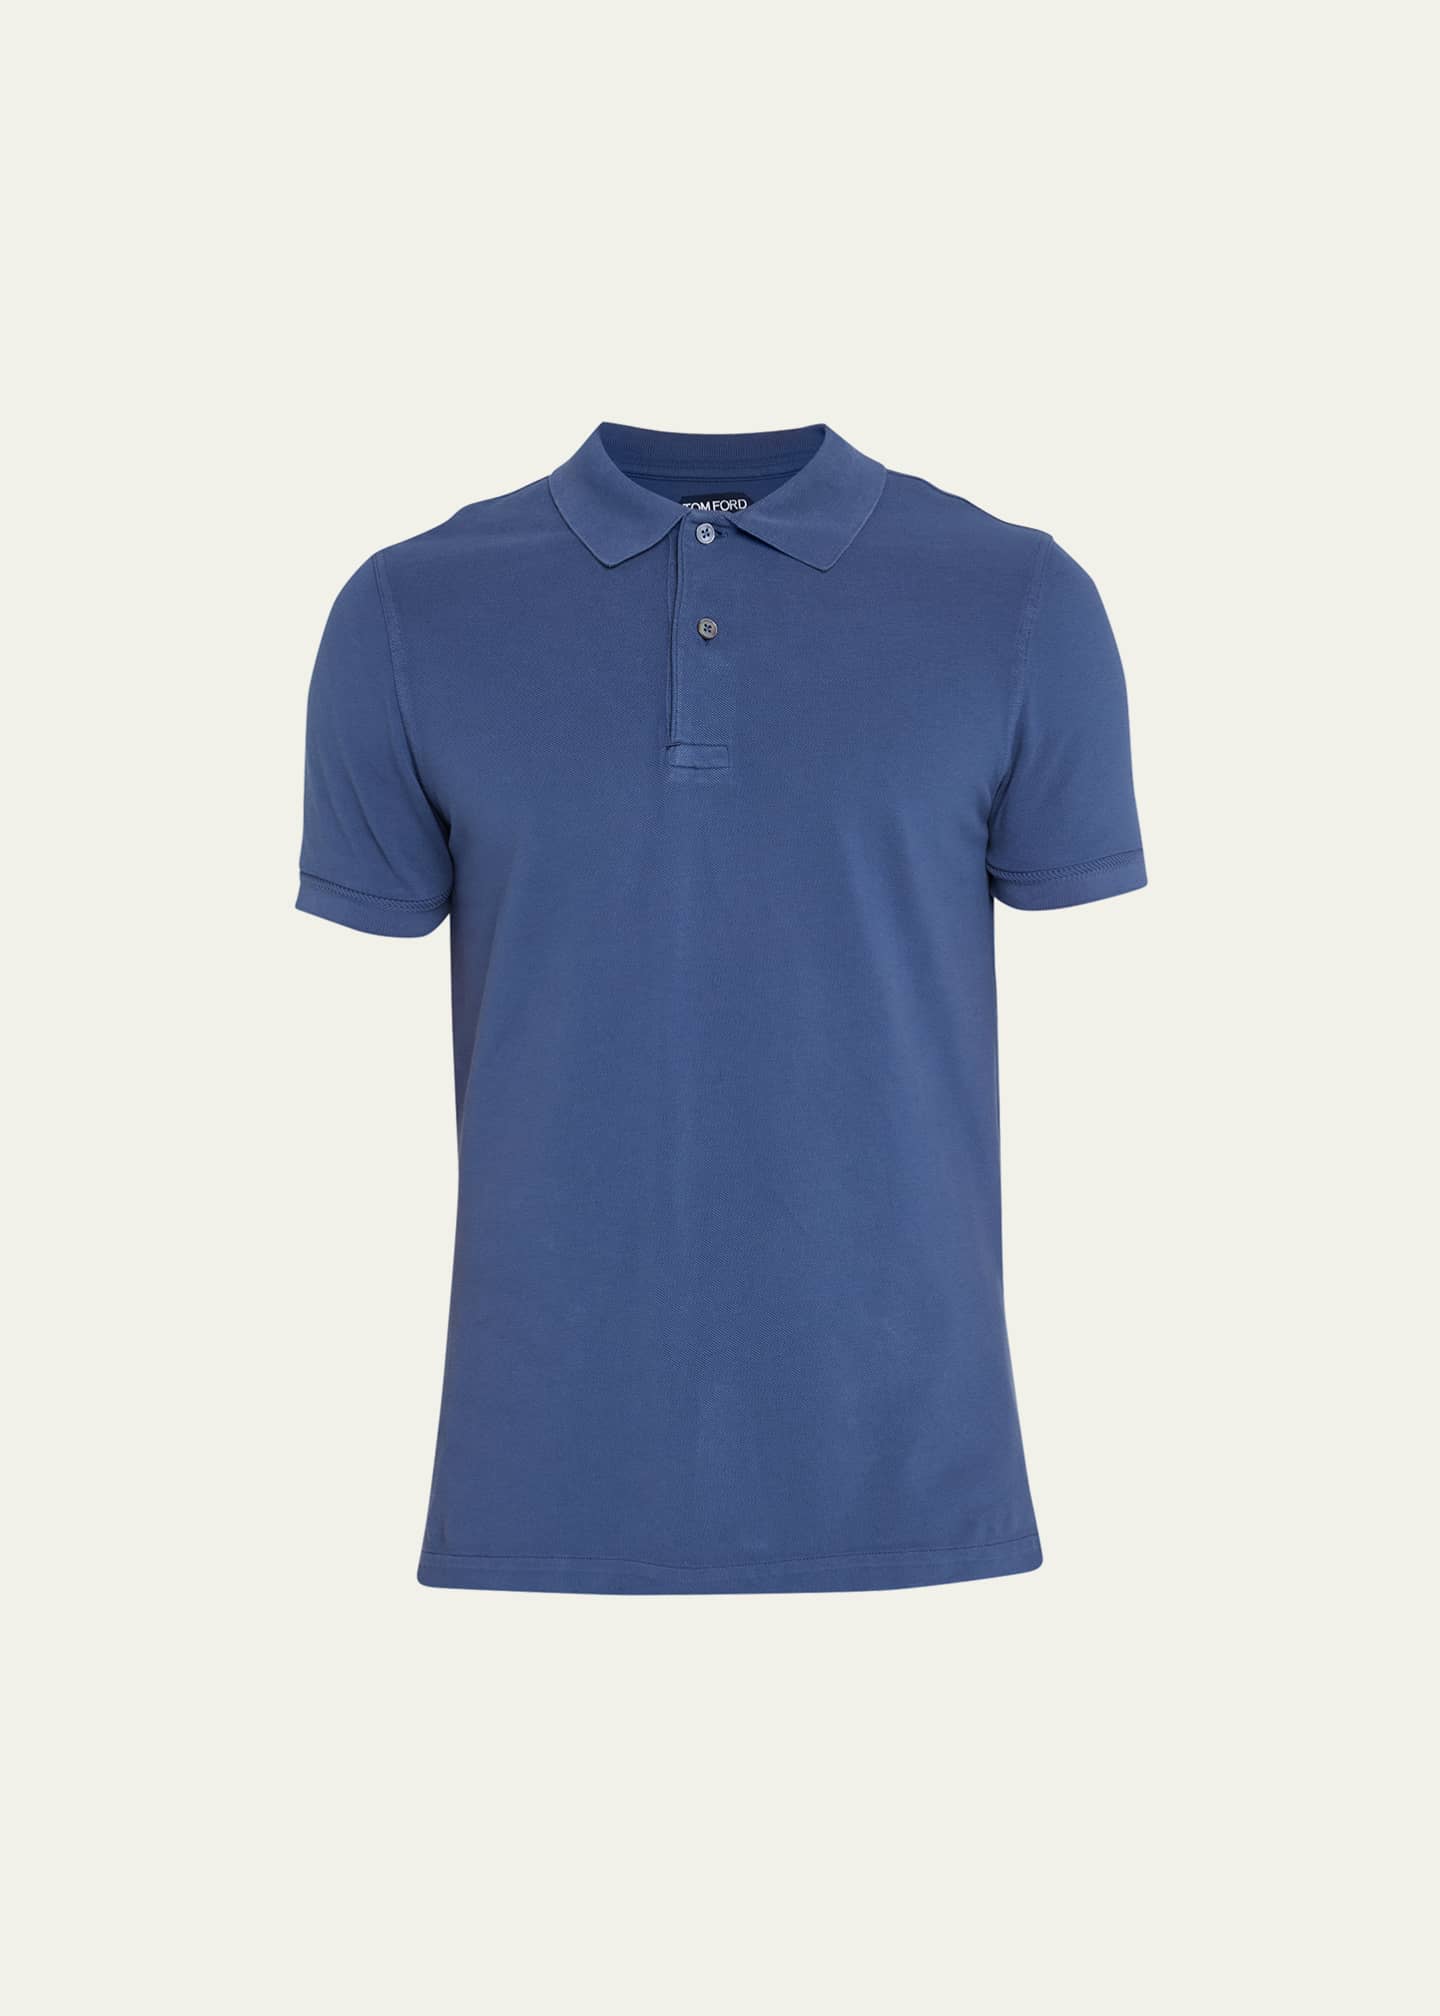 TOM FORD Men's Cotton Piqué Polo Shirt - Bergdorf Goodman